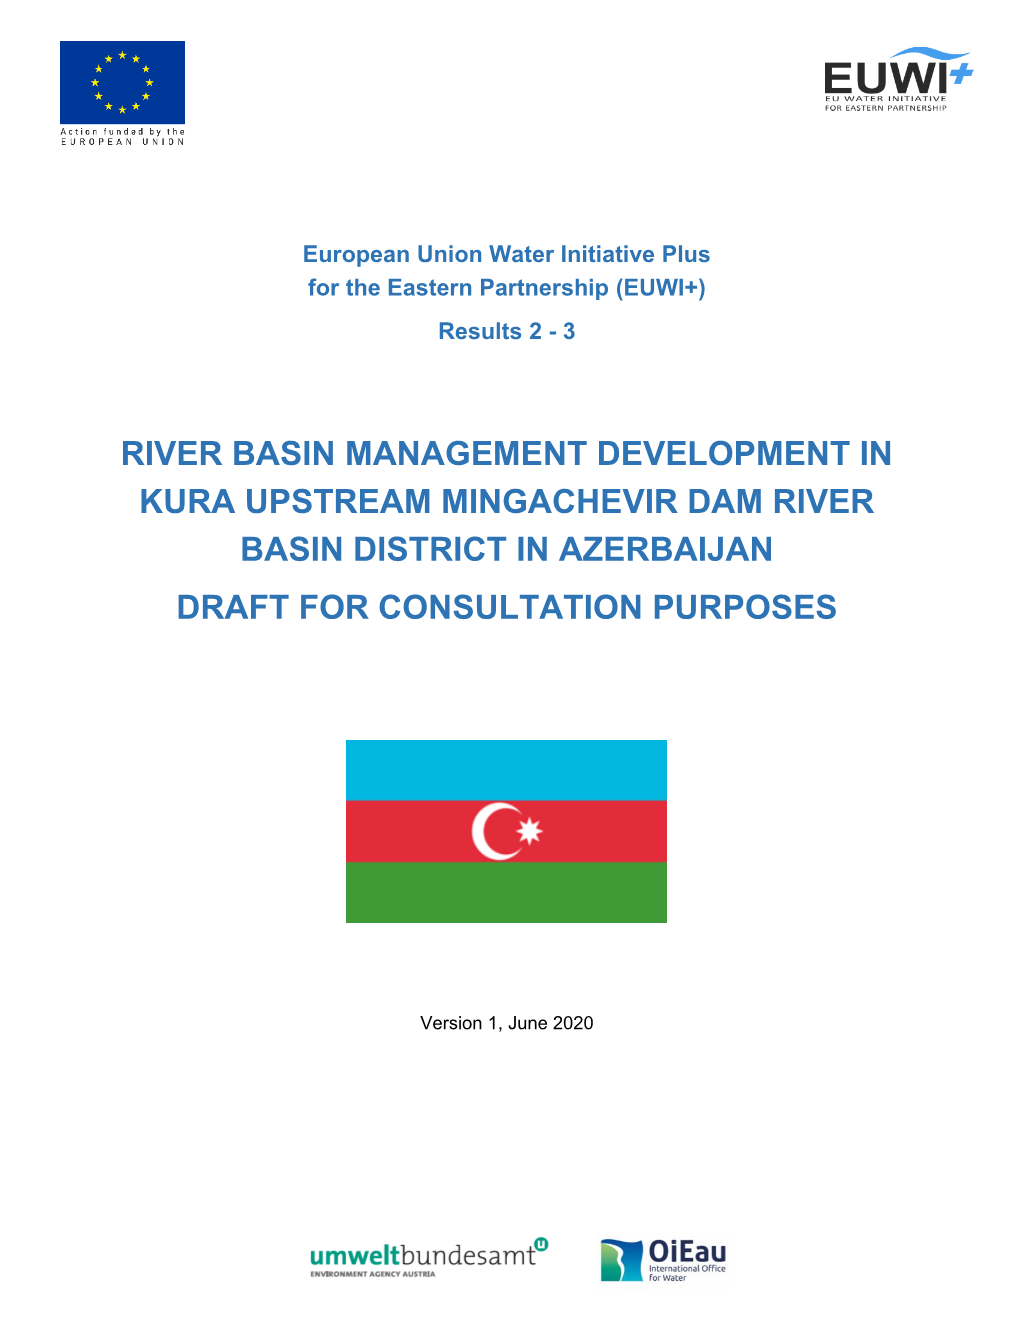 River Basin Management Development in Kura Upstream Mingachevir Dam River Basin District in Azerbaijan Draft for Consultation Purposes